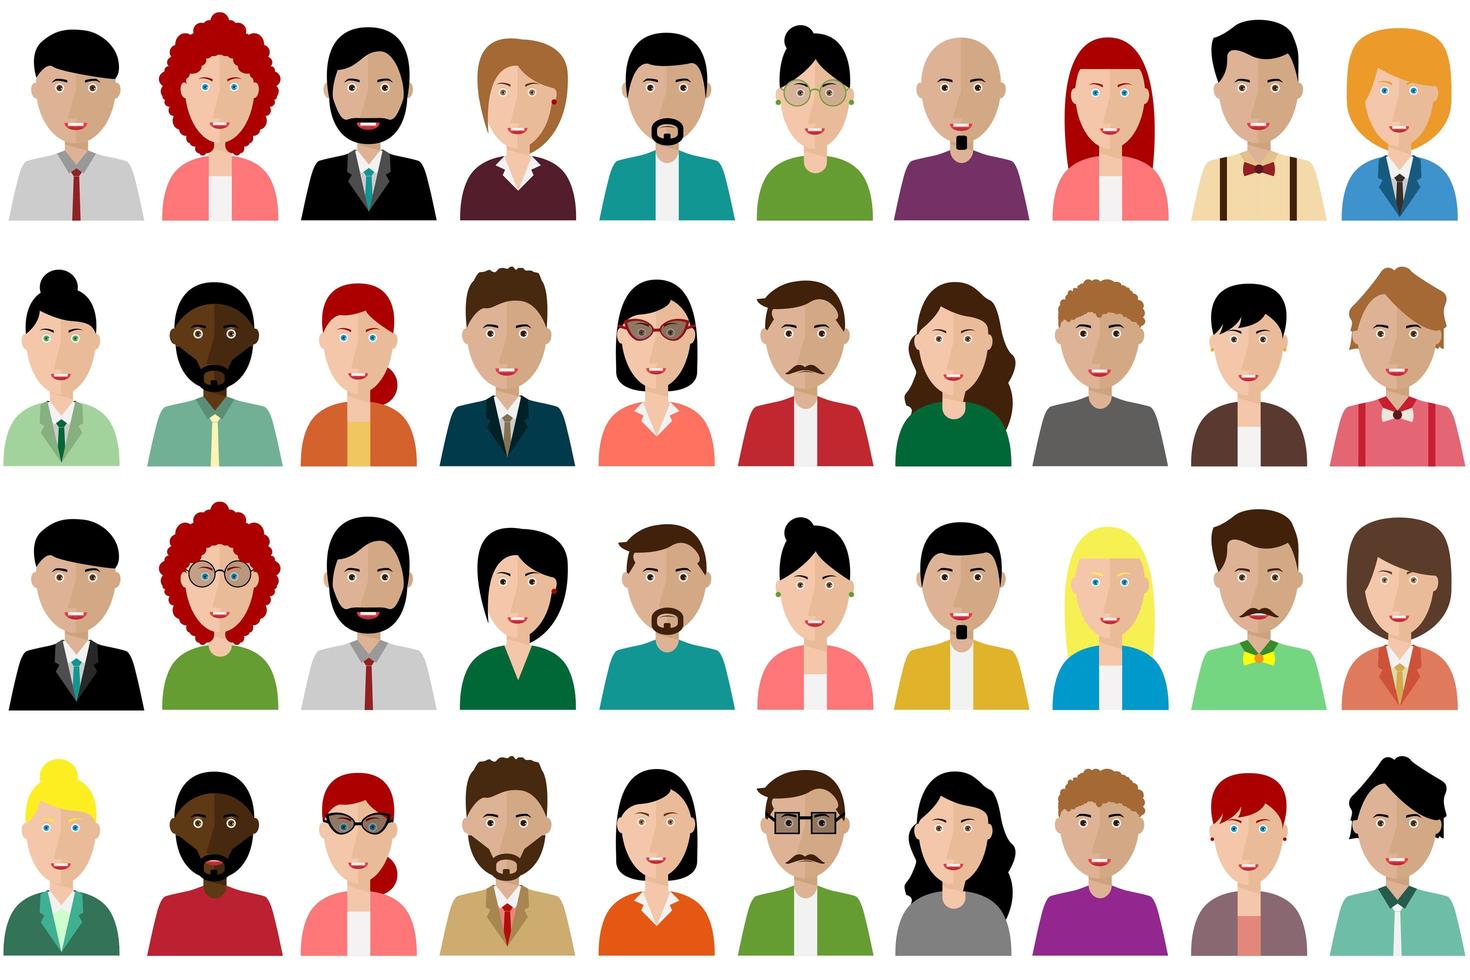 kleurrijke mensen avatar set vector